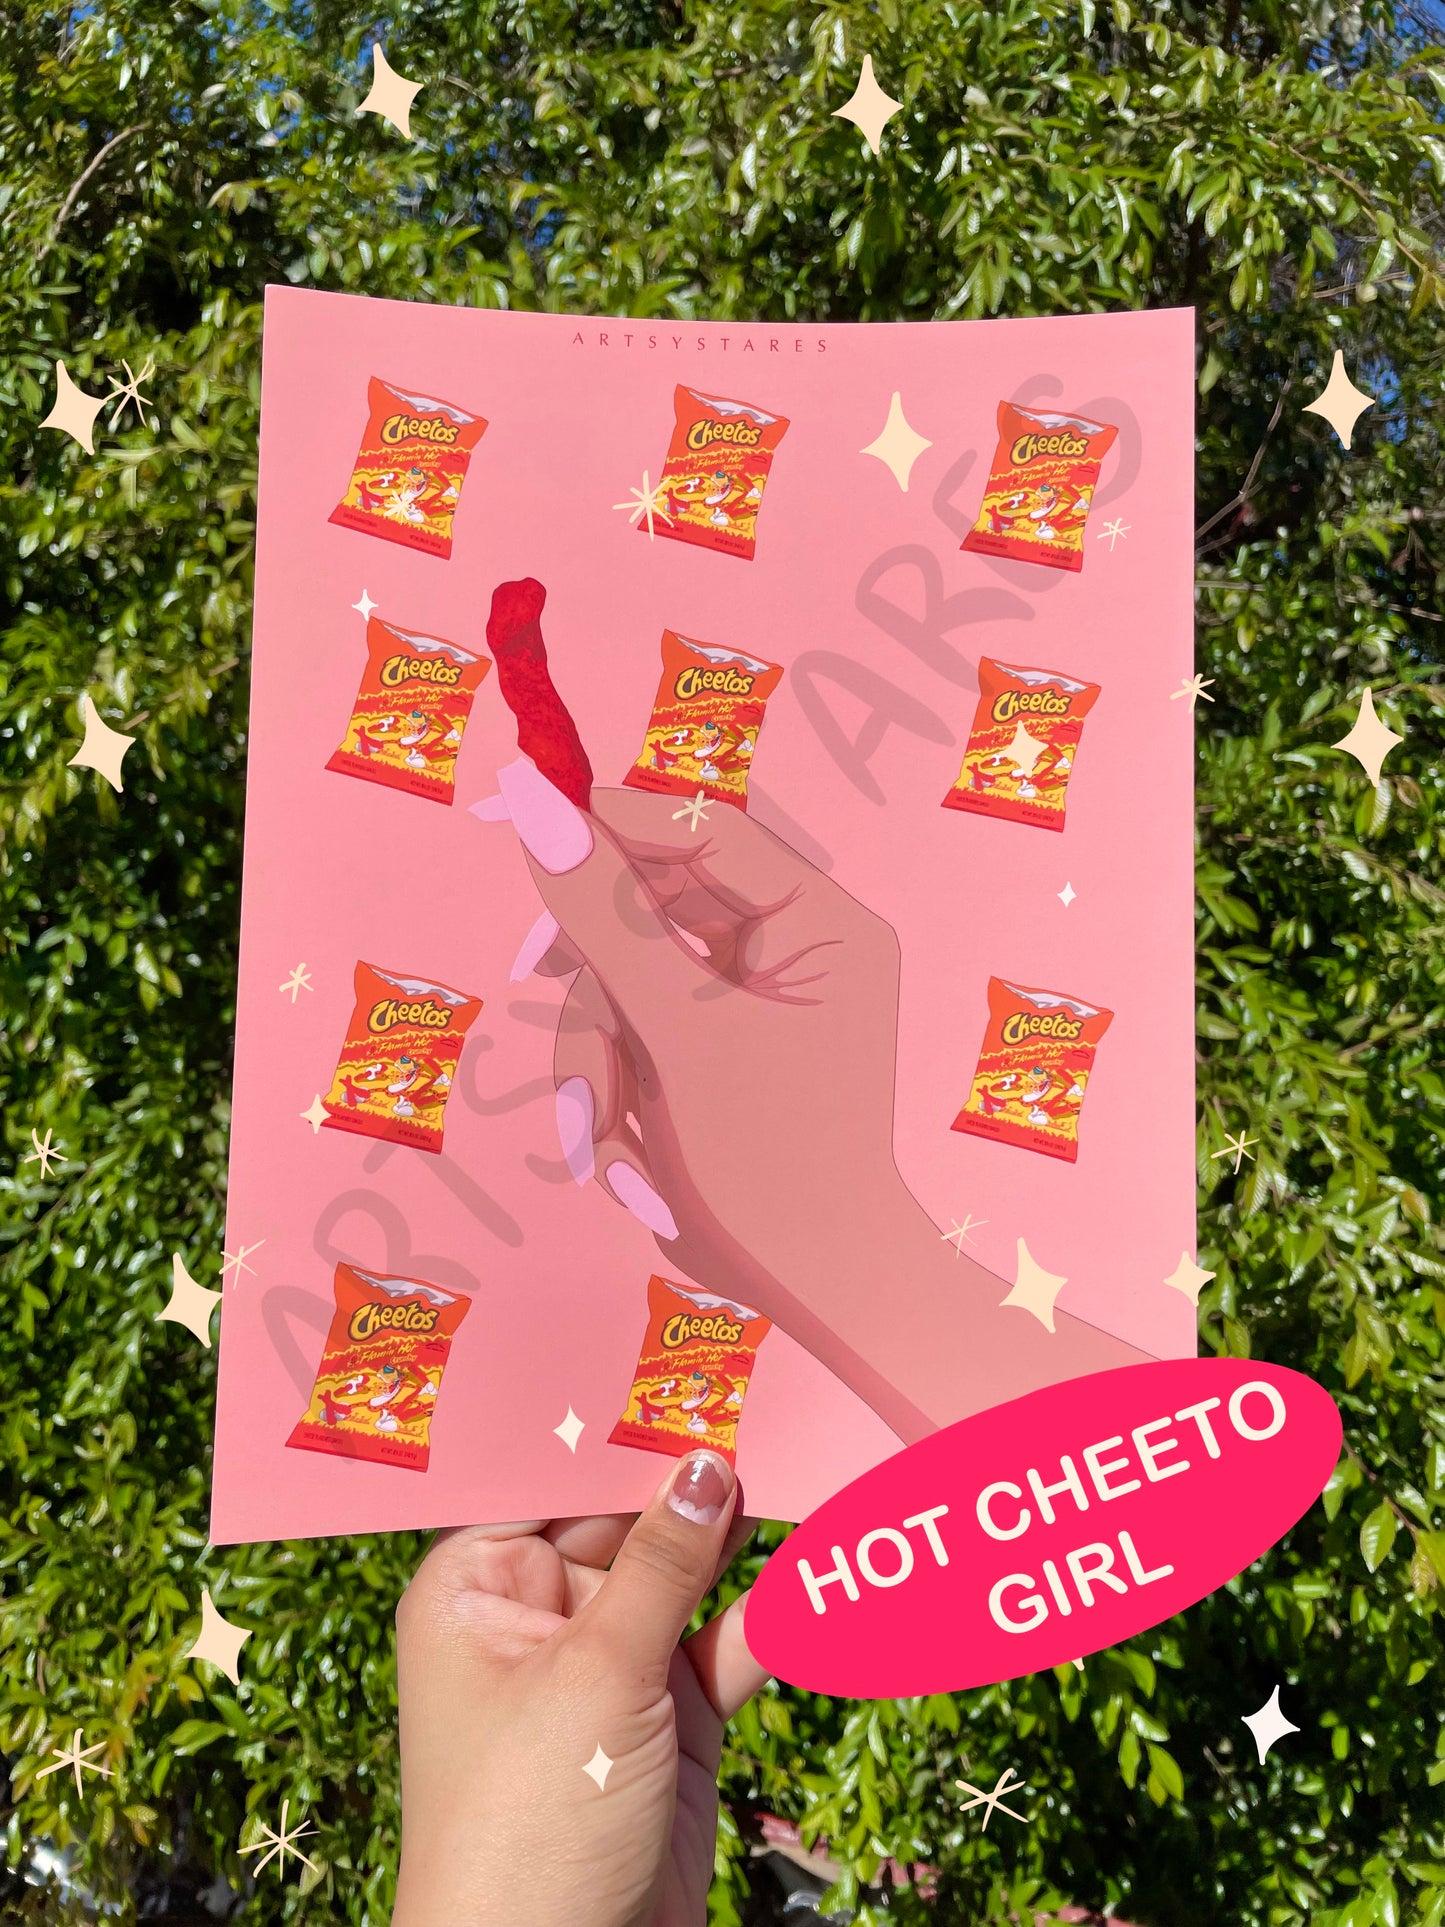 Hot Cheeto Girl